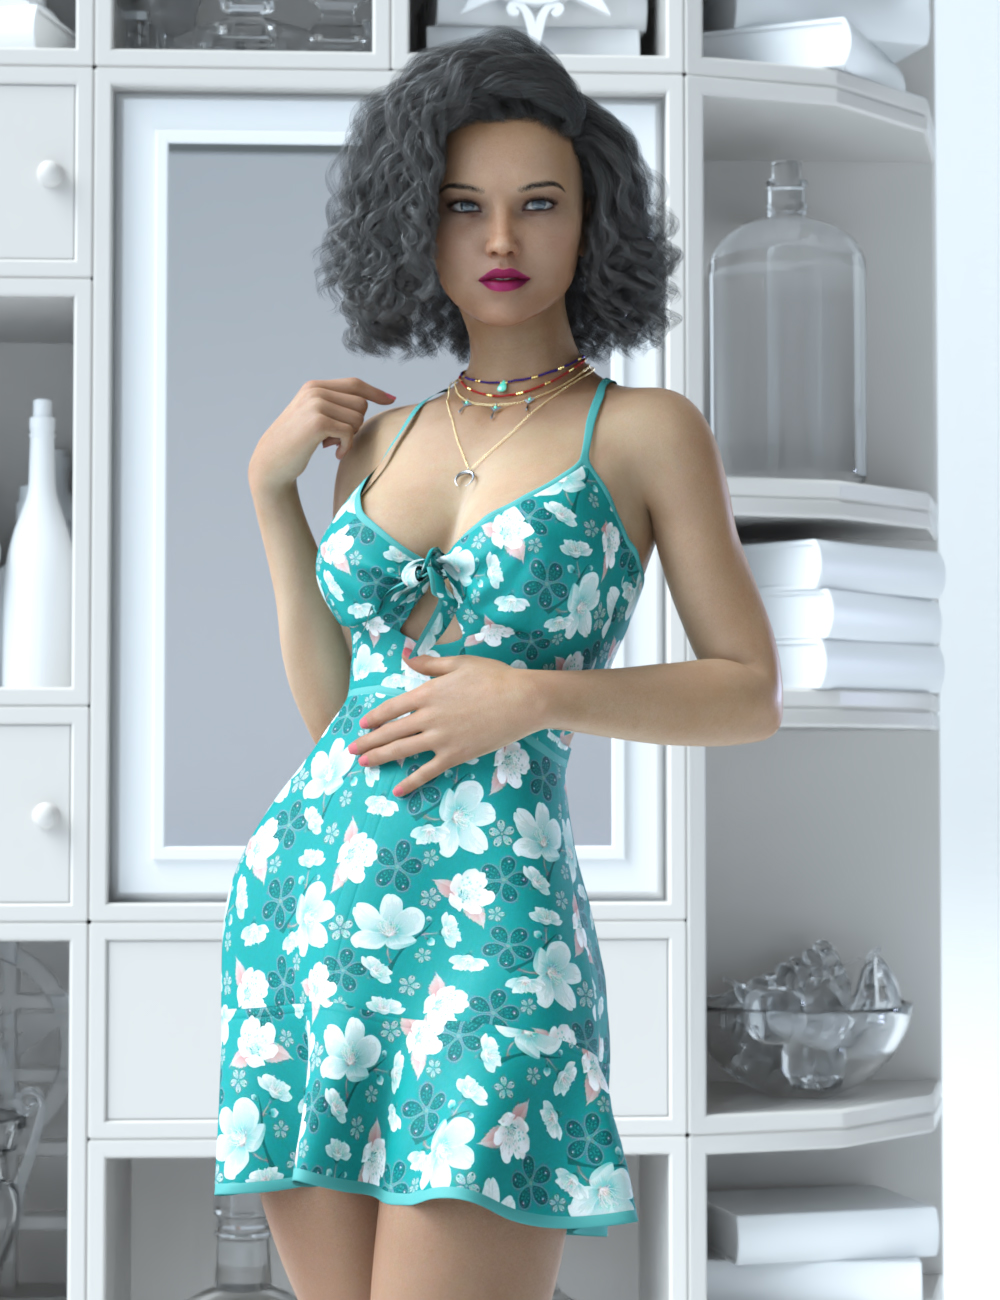 Linda for Genesis 8 Female by: Exart3D, 3D Models by Daz 3D